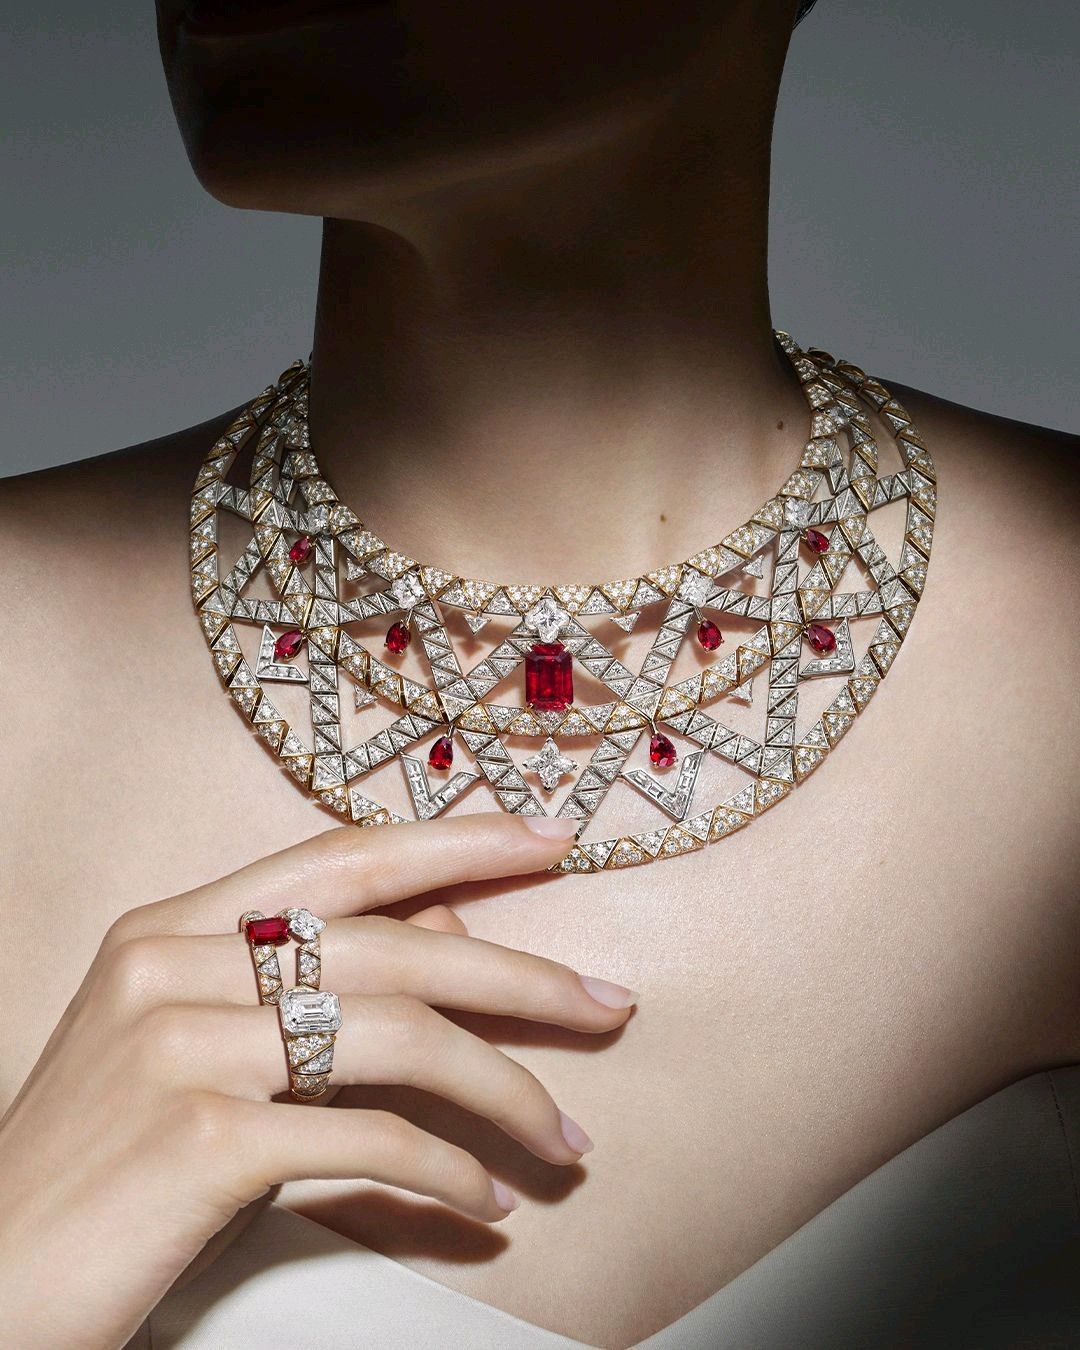 Francesca Amfitheatrof on Spirit, her new high jewellery